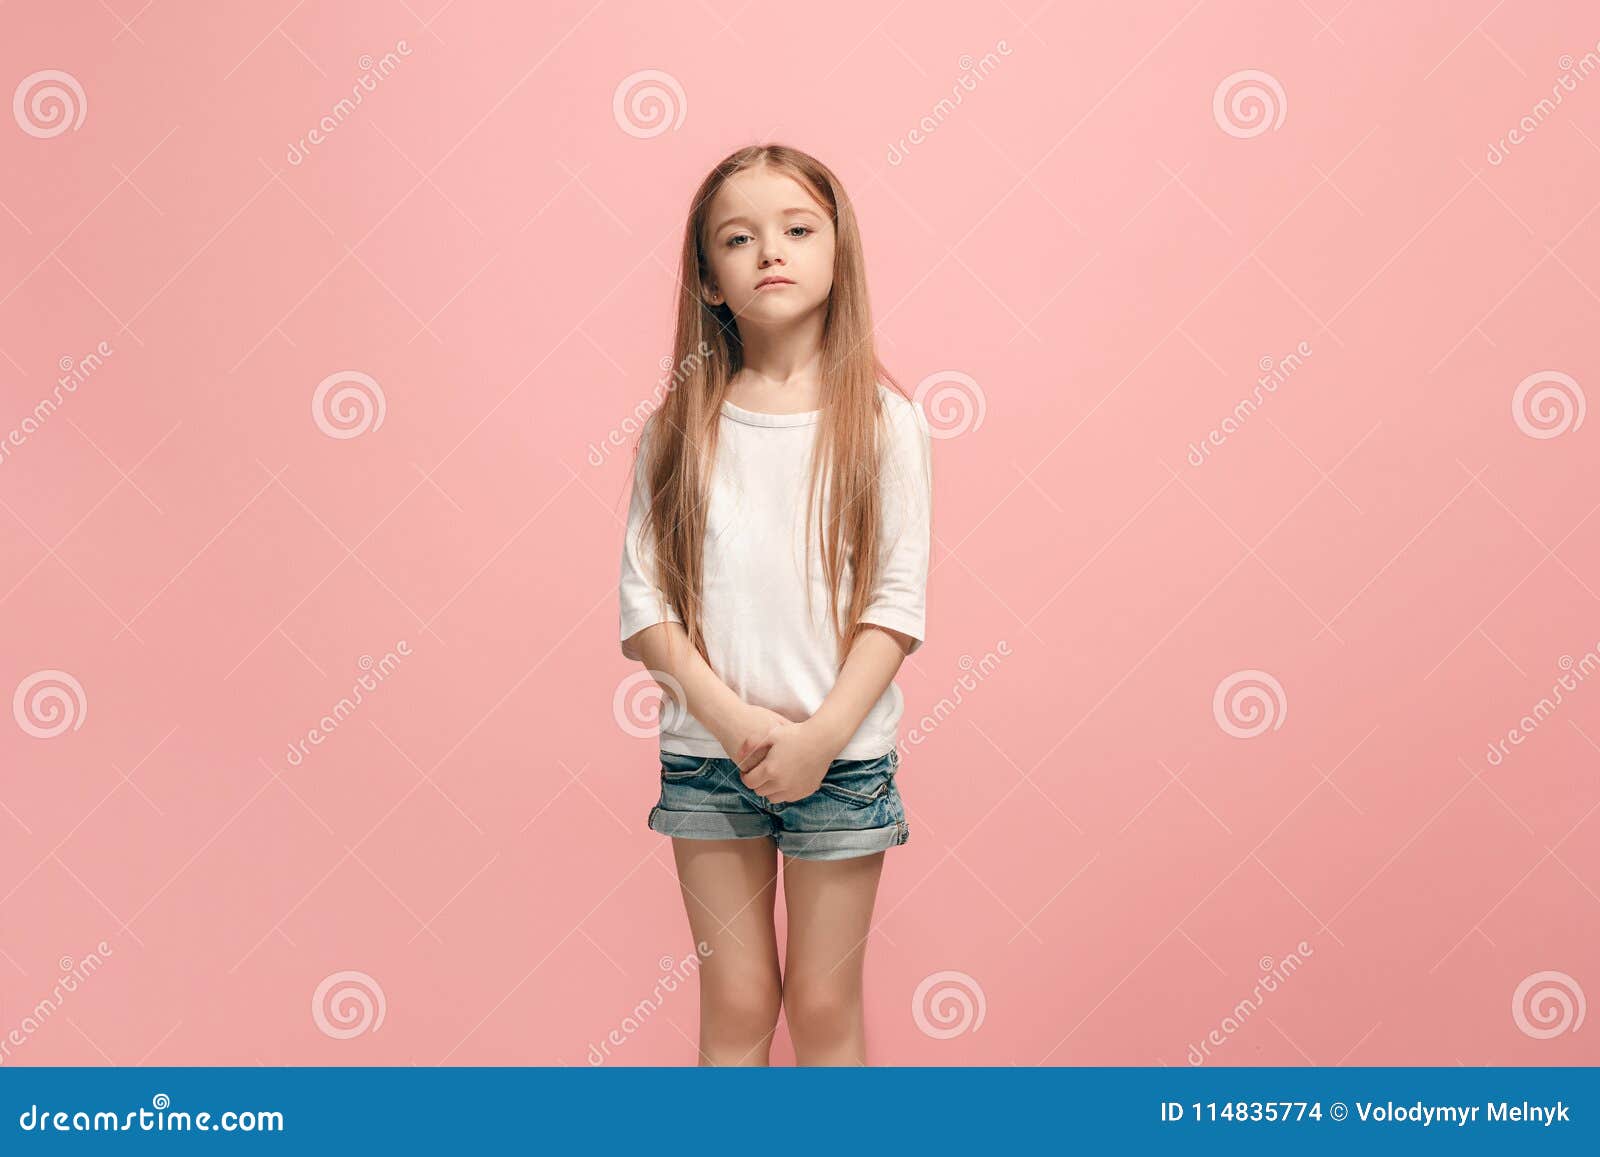 Young Serious Thoughtful Sad Teen Girl Stock Photo - Image of ...